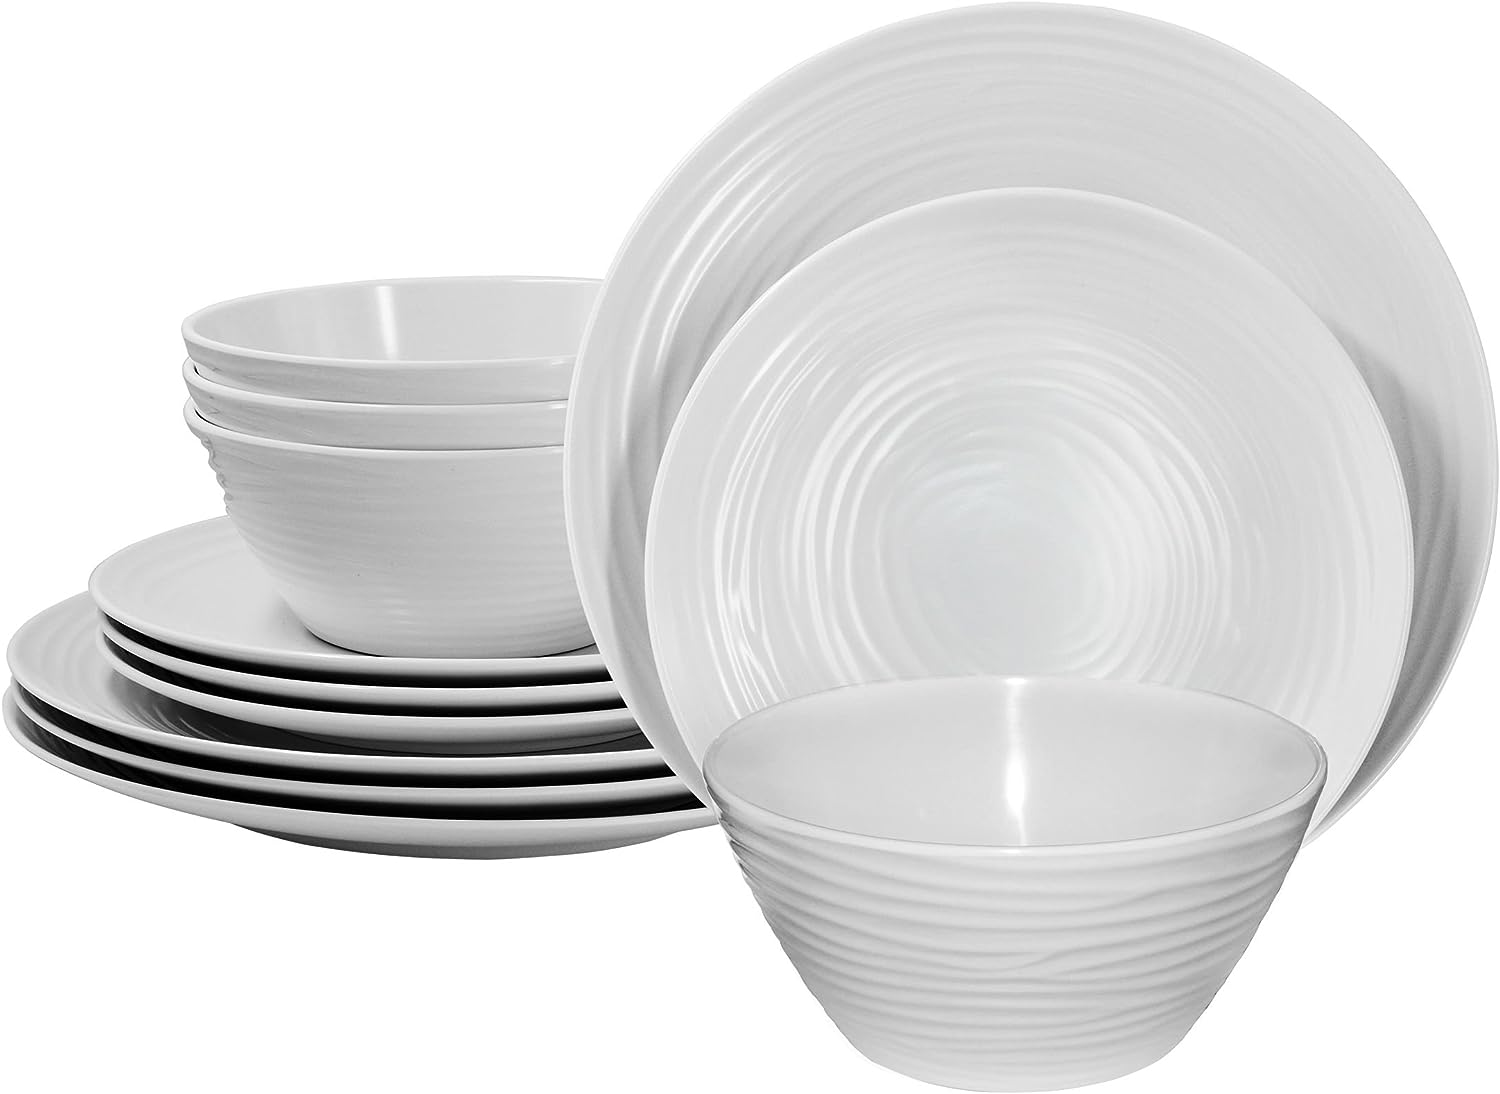 Parhoma-White-Melamine-Plastic-Home-Dinnerware-Set